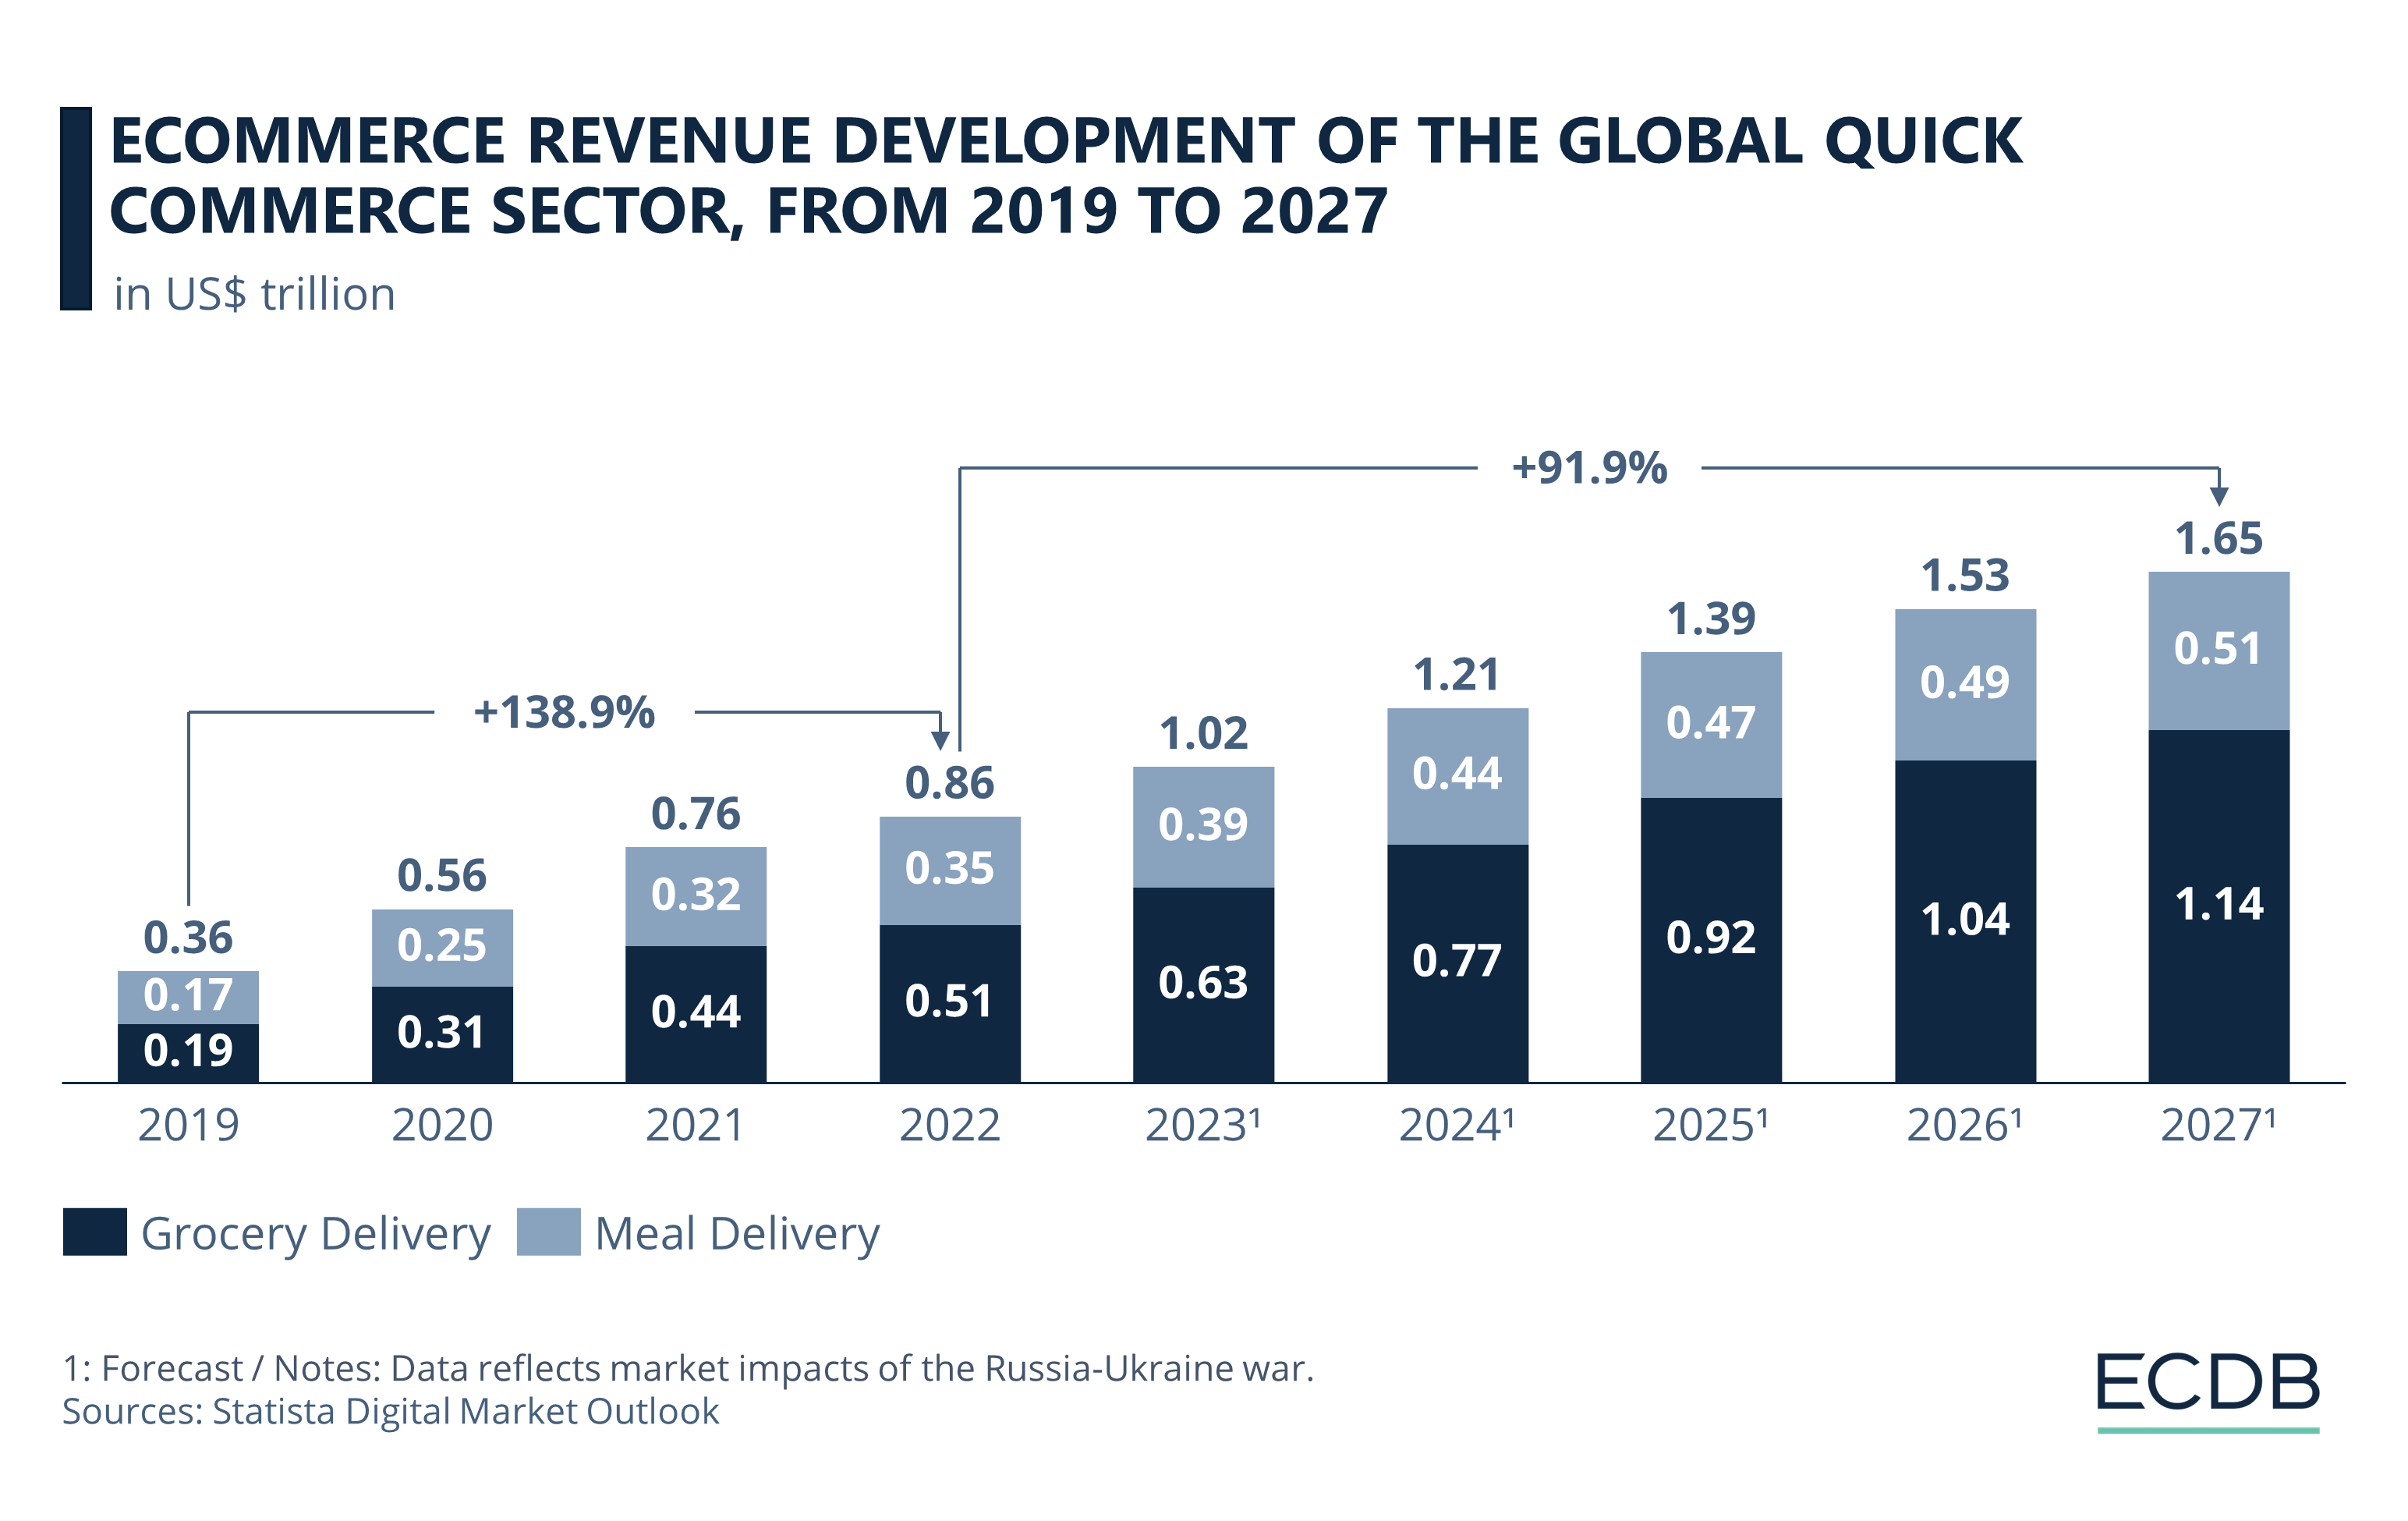 eCommerce Revenue Development of the Global Quick Commerce Sector, 2019-2027